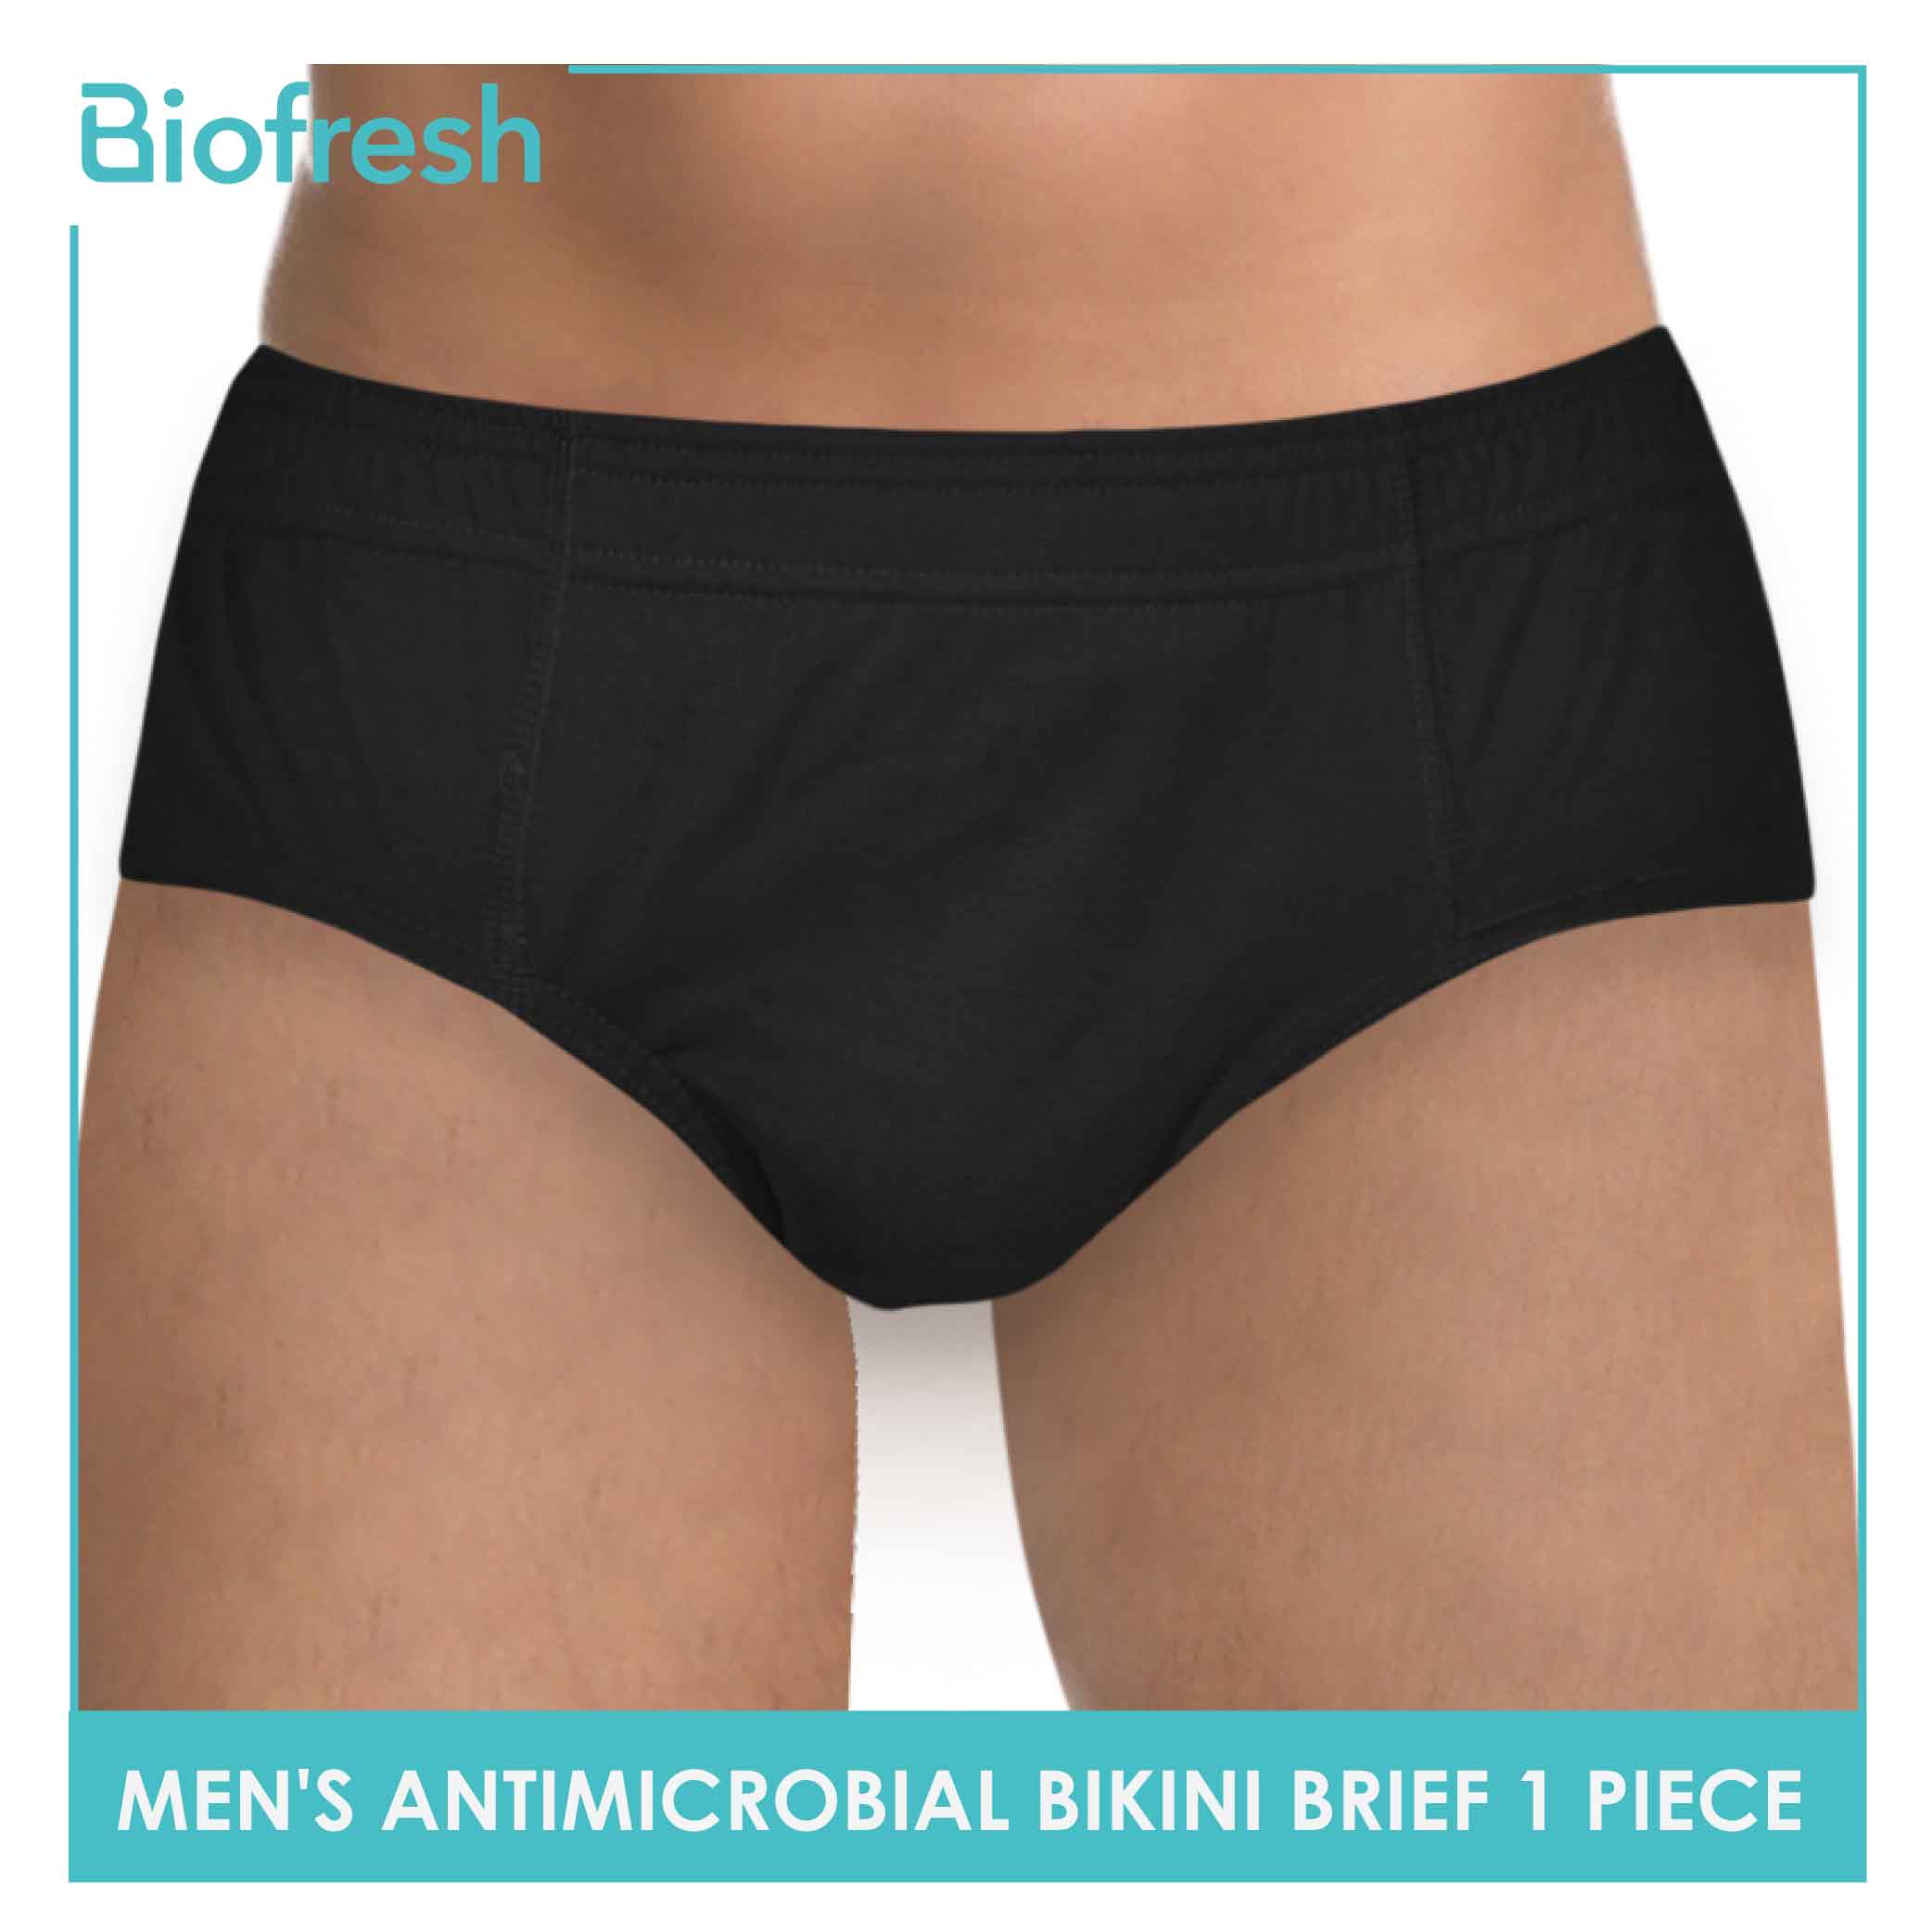 Men's Antimicrobial Bikini Brief